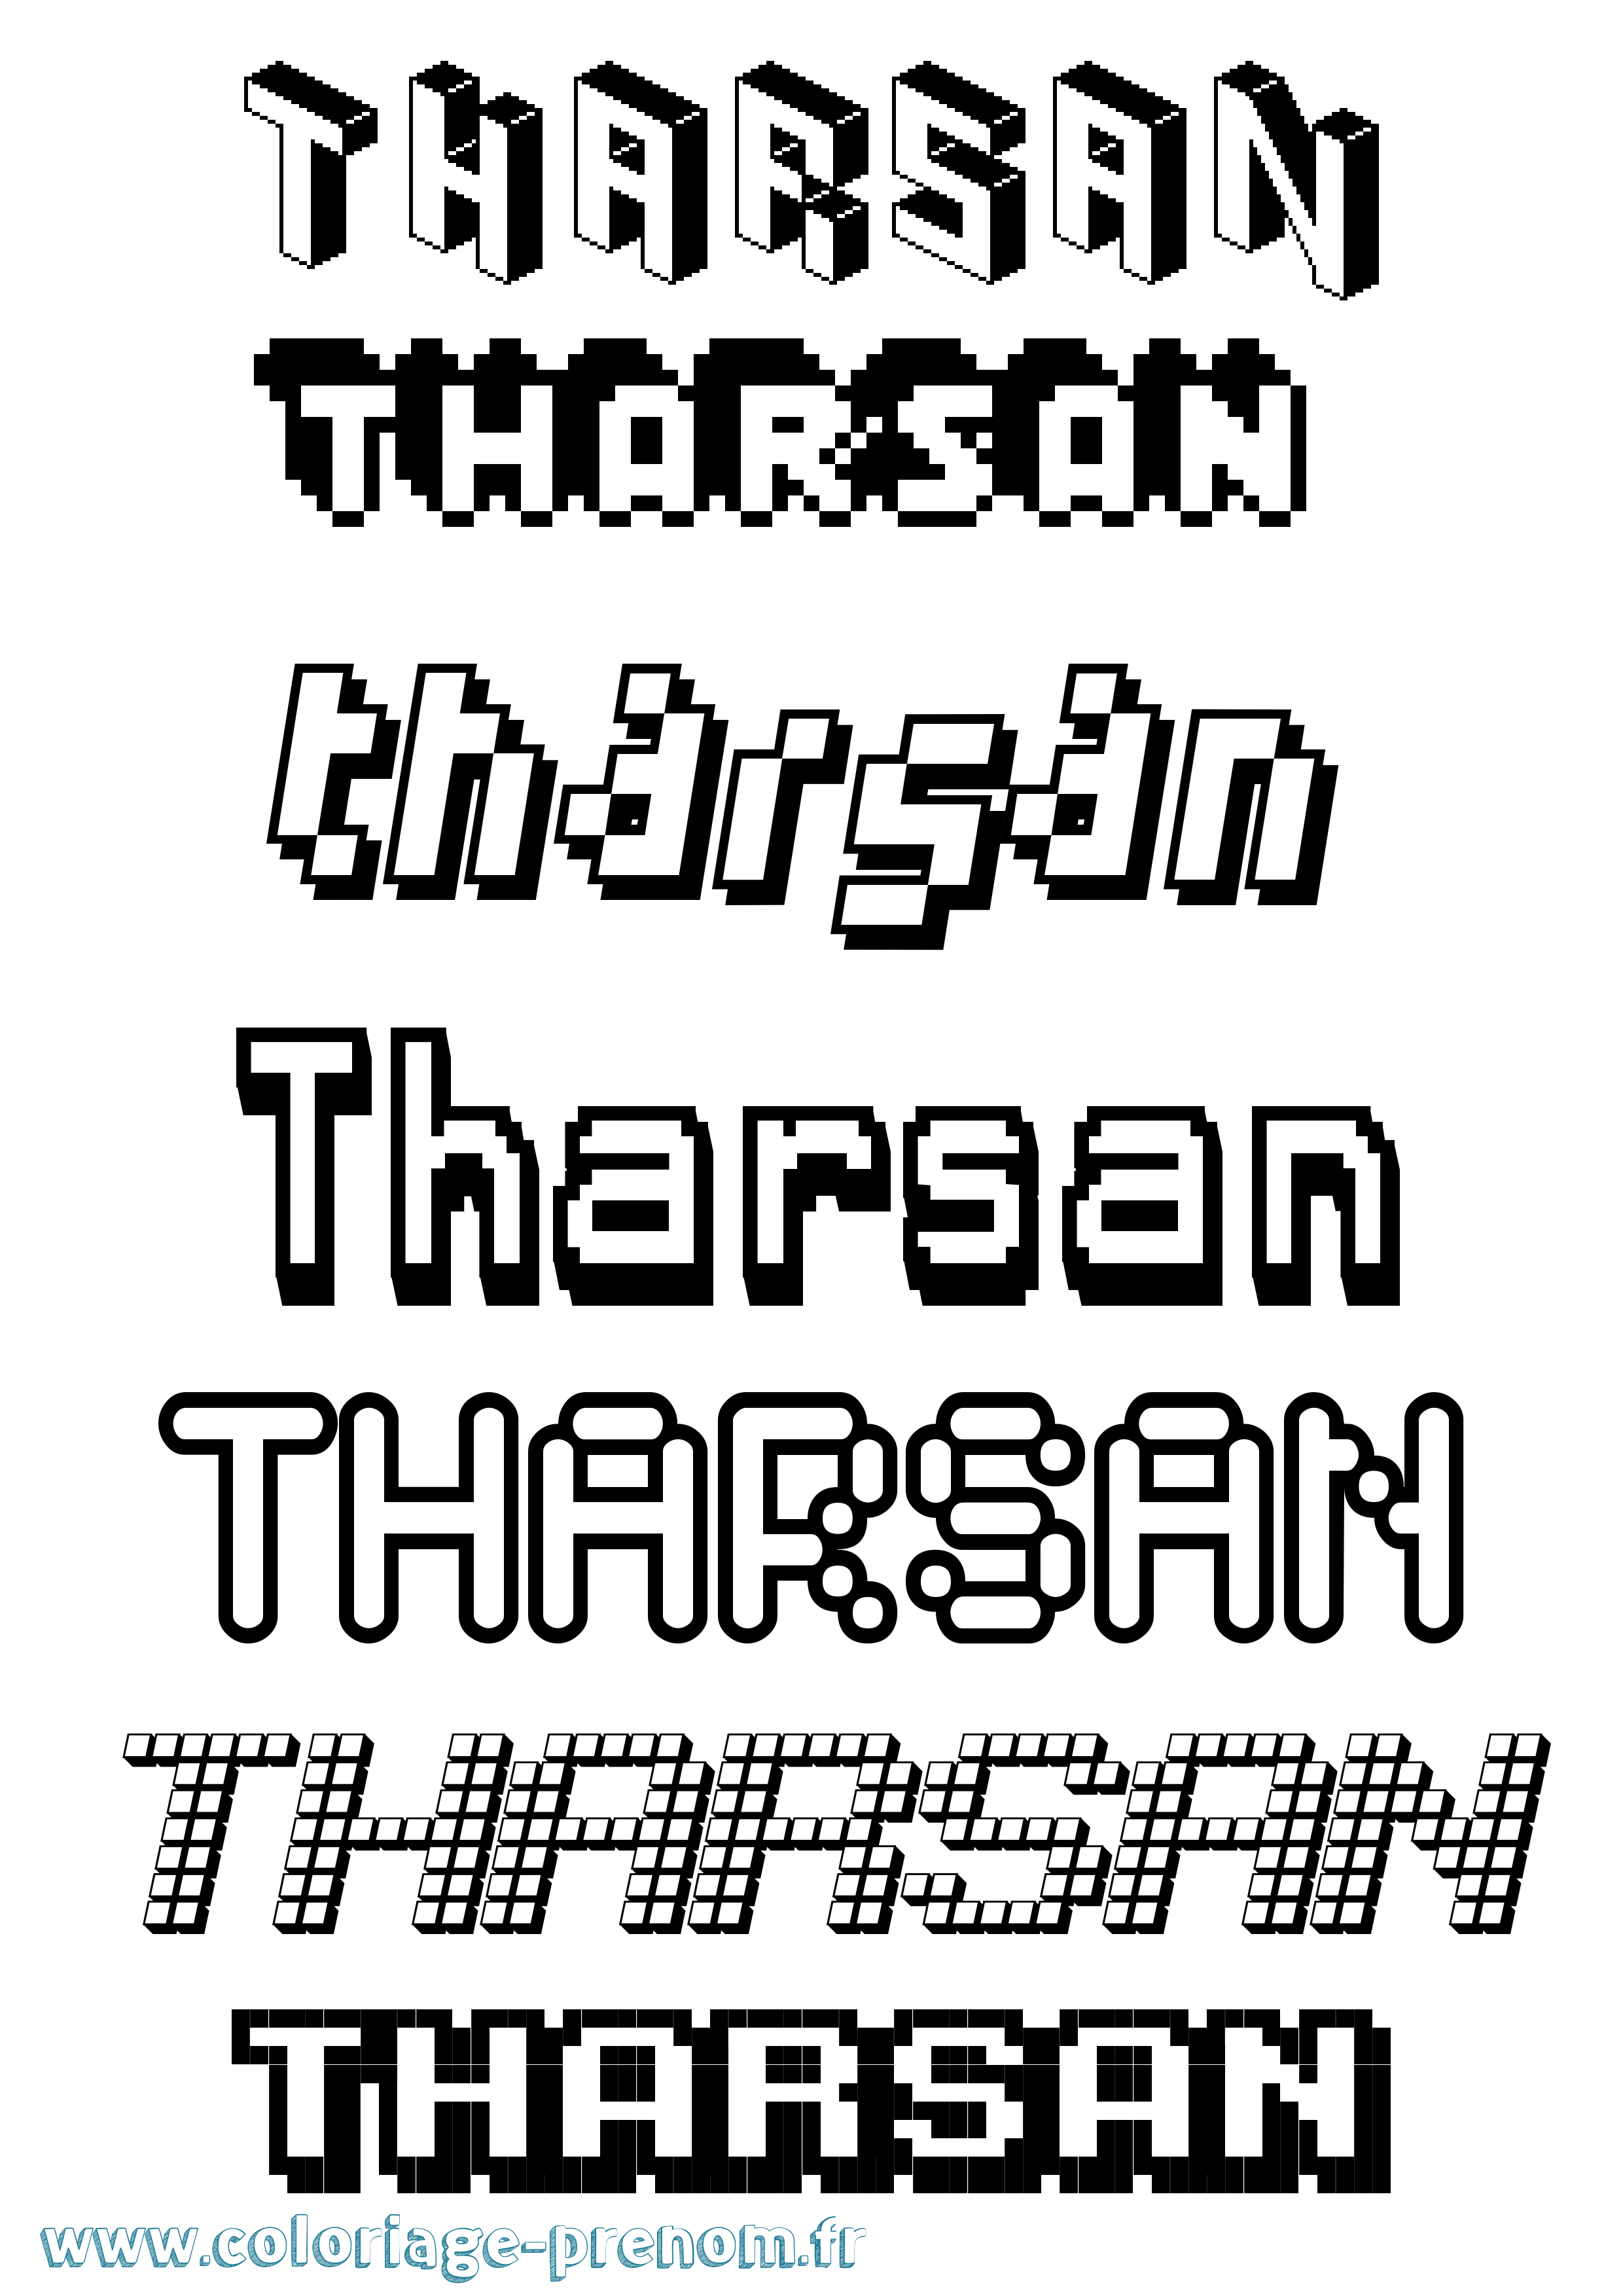 Coloriage prénom Tharsan Pixel